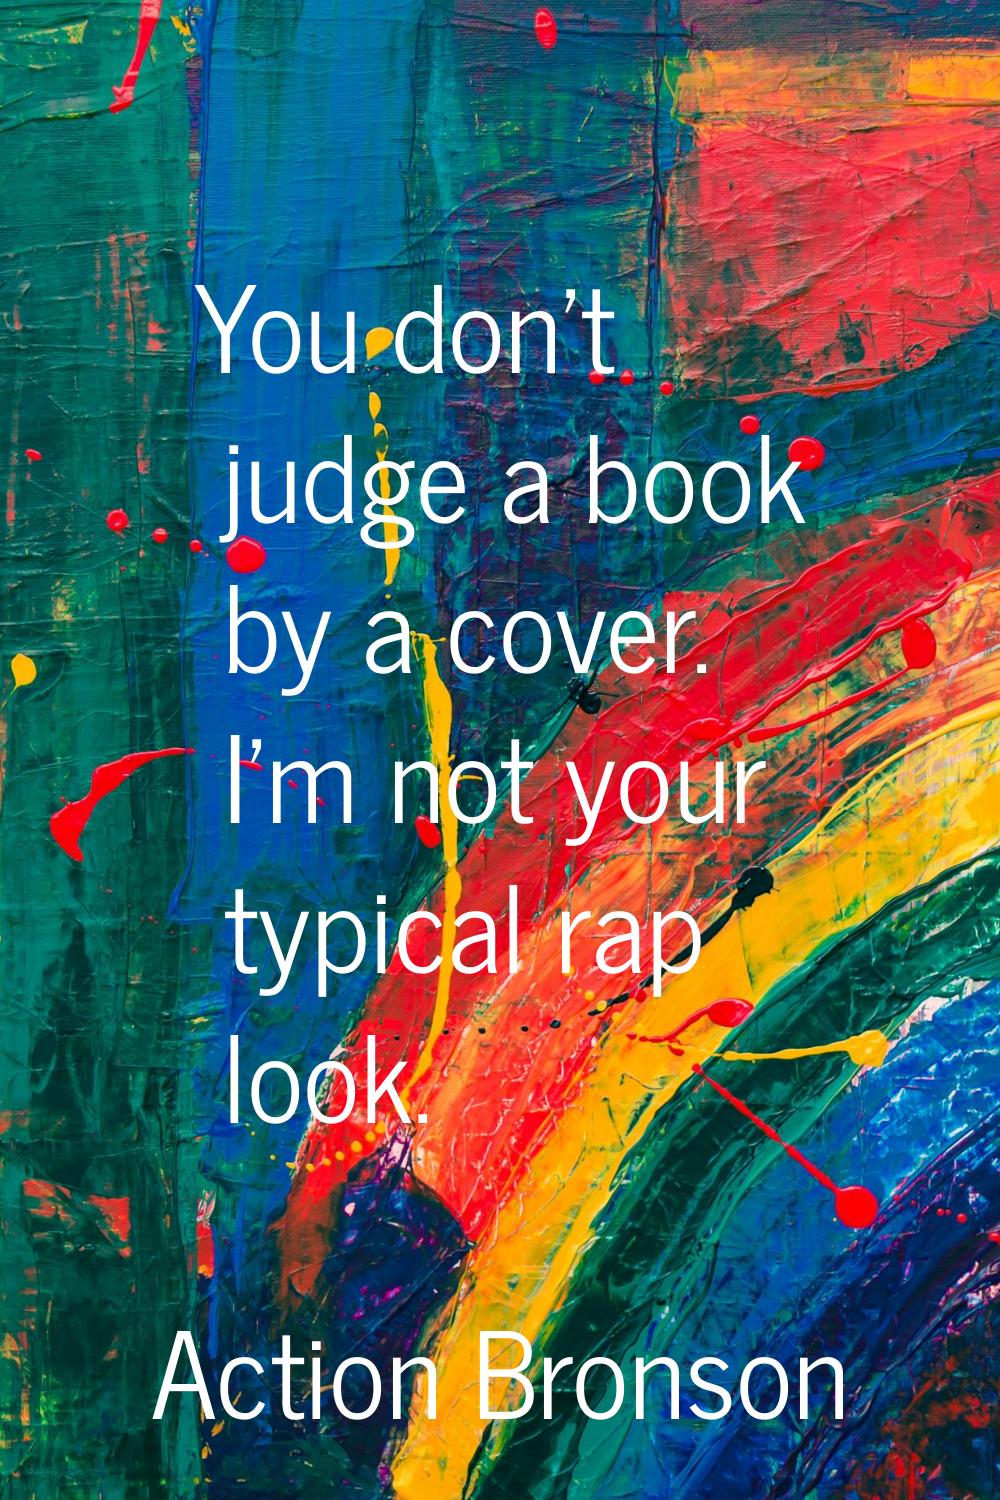 You don't judge a book by a cover. I'm not your typical rap look.